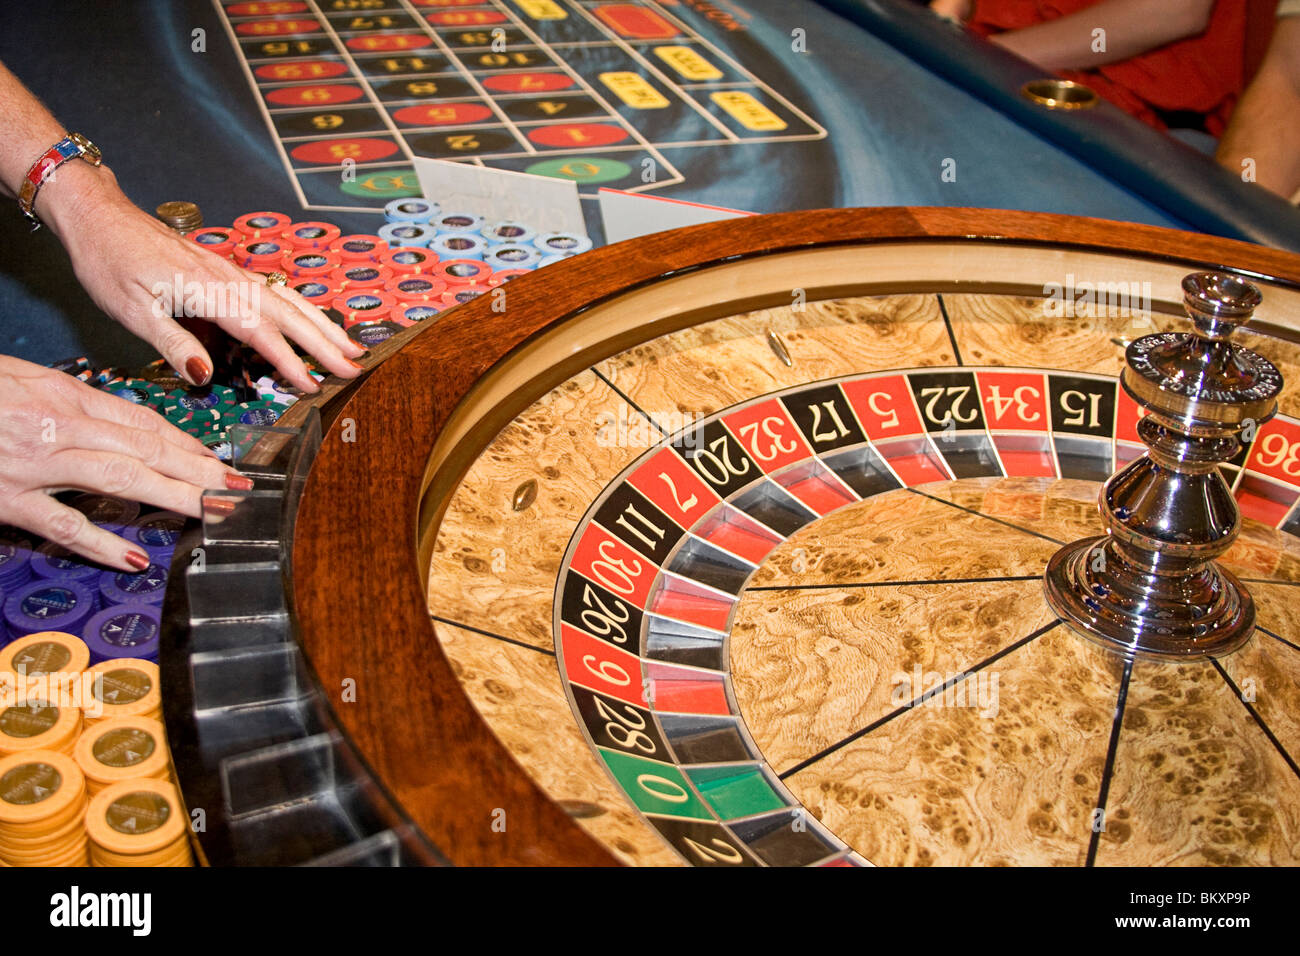 Szene auf Gaming-Etage des Casino - Roulette-Rad, South Lake Tahoe, Nevada, USA. Stockfoto